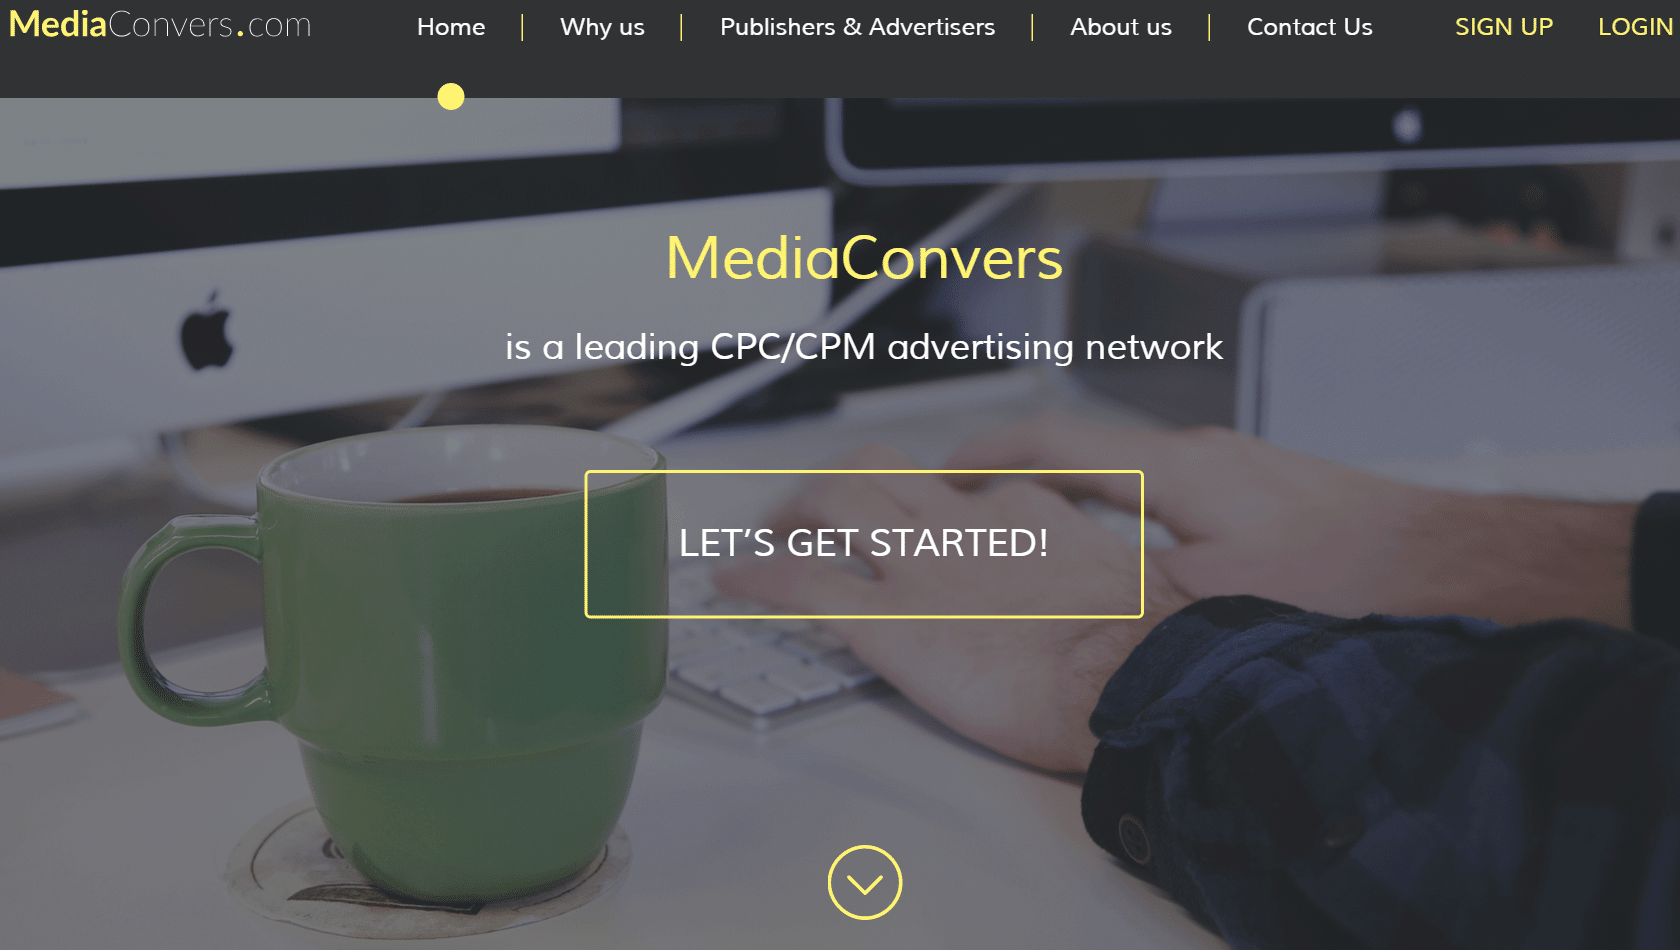 Mediaconvers